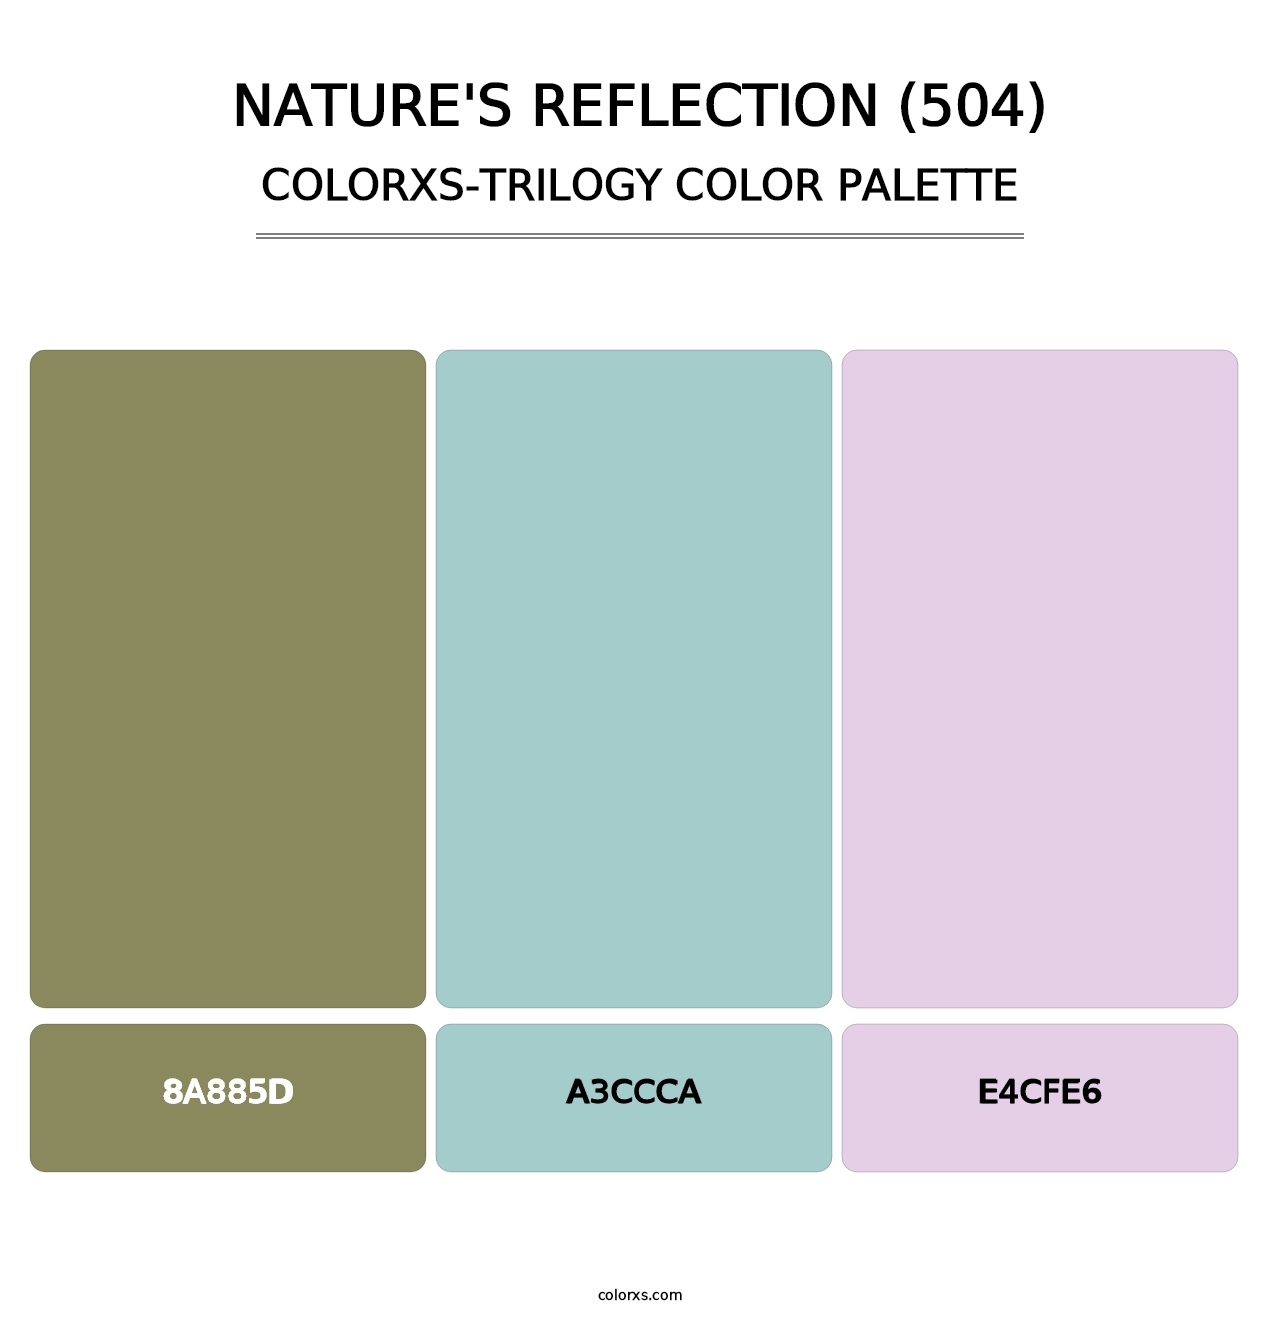 Nature's Reflection (504) - Colorxs Trilogy Palette